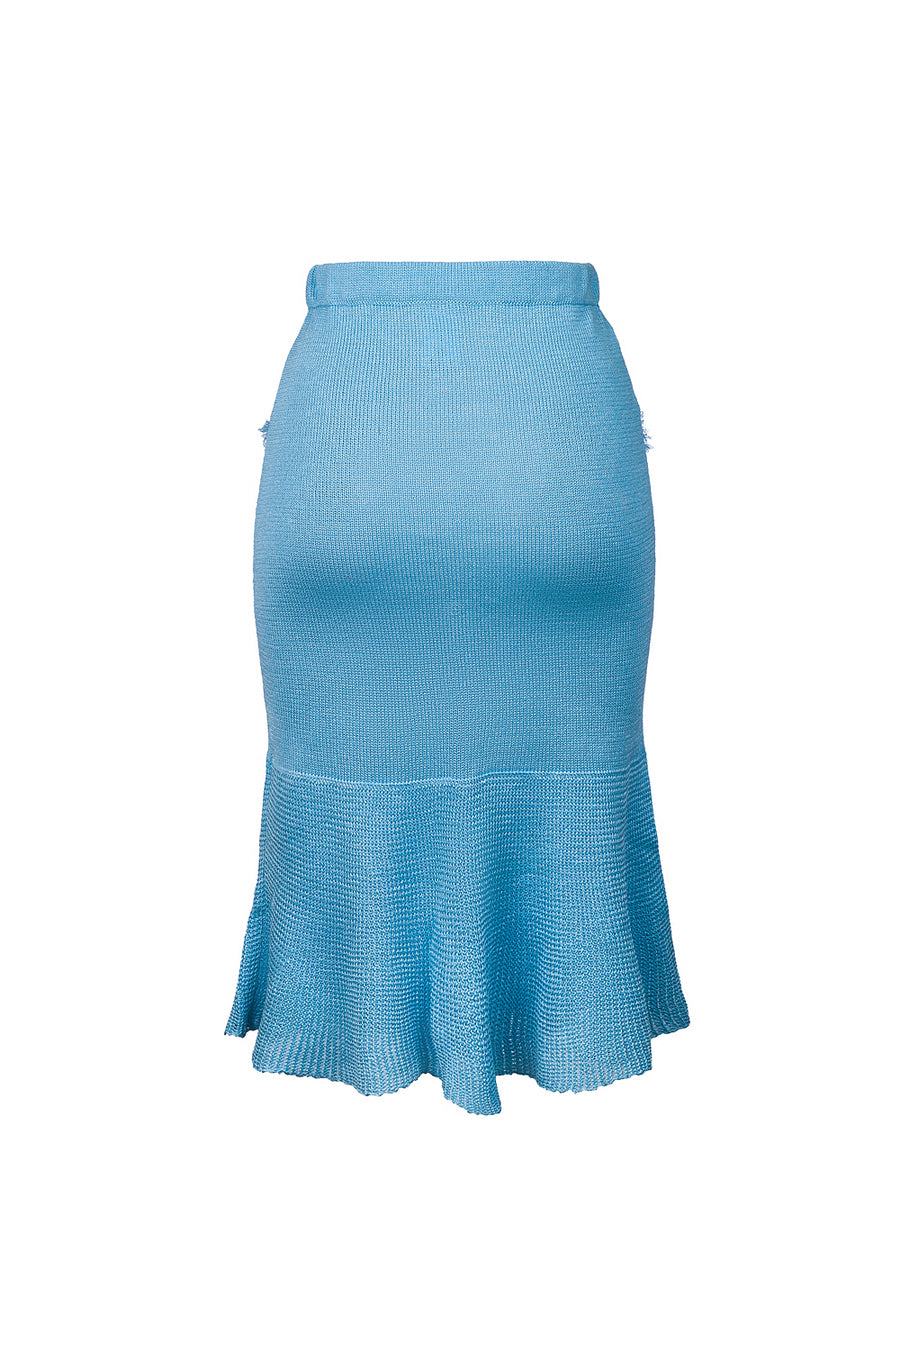 andreeva blue knit skirt